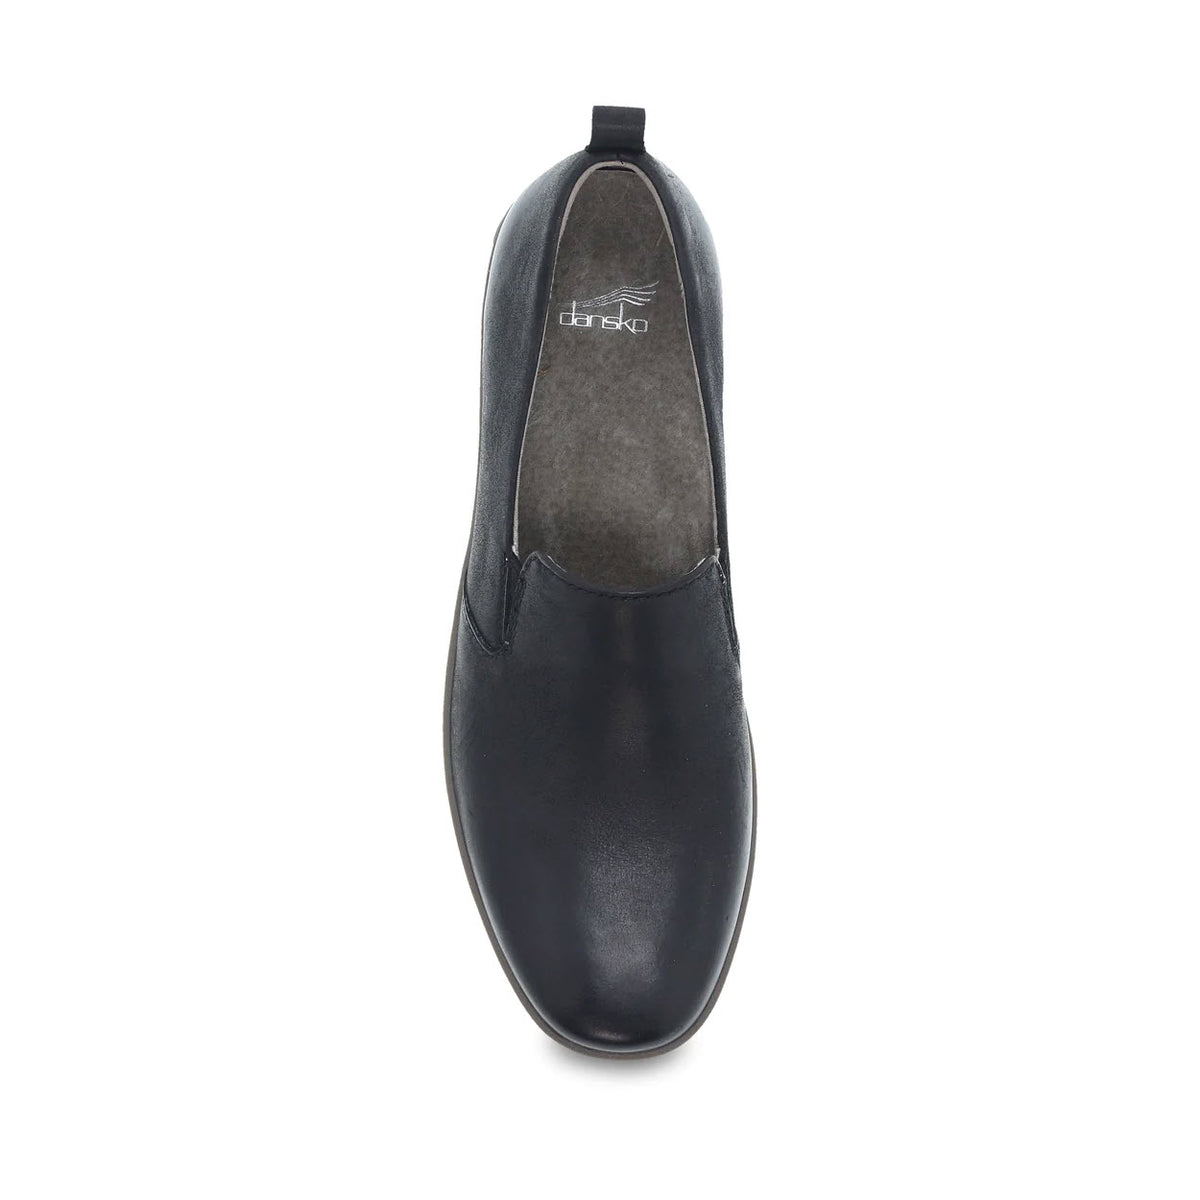 A single black Dansko Linley slip-on shoe viewed from above.